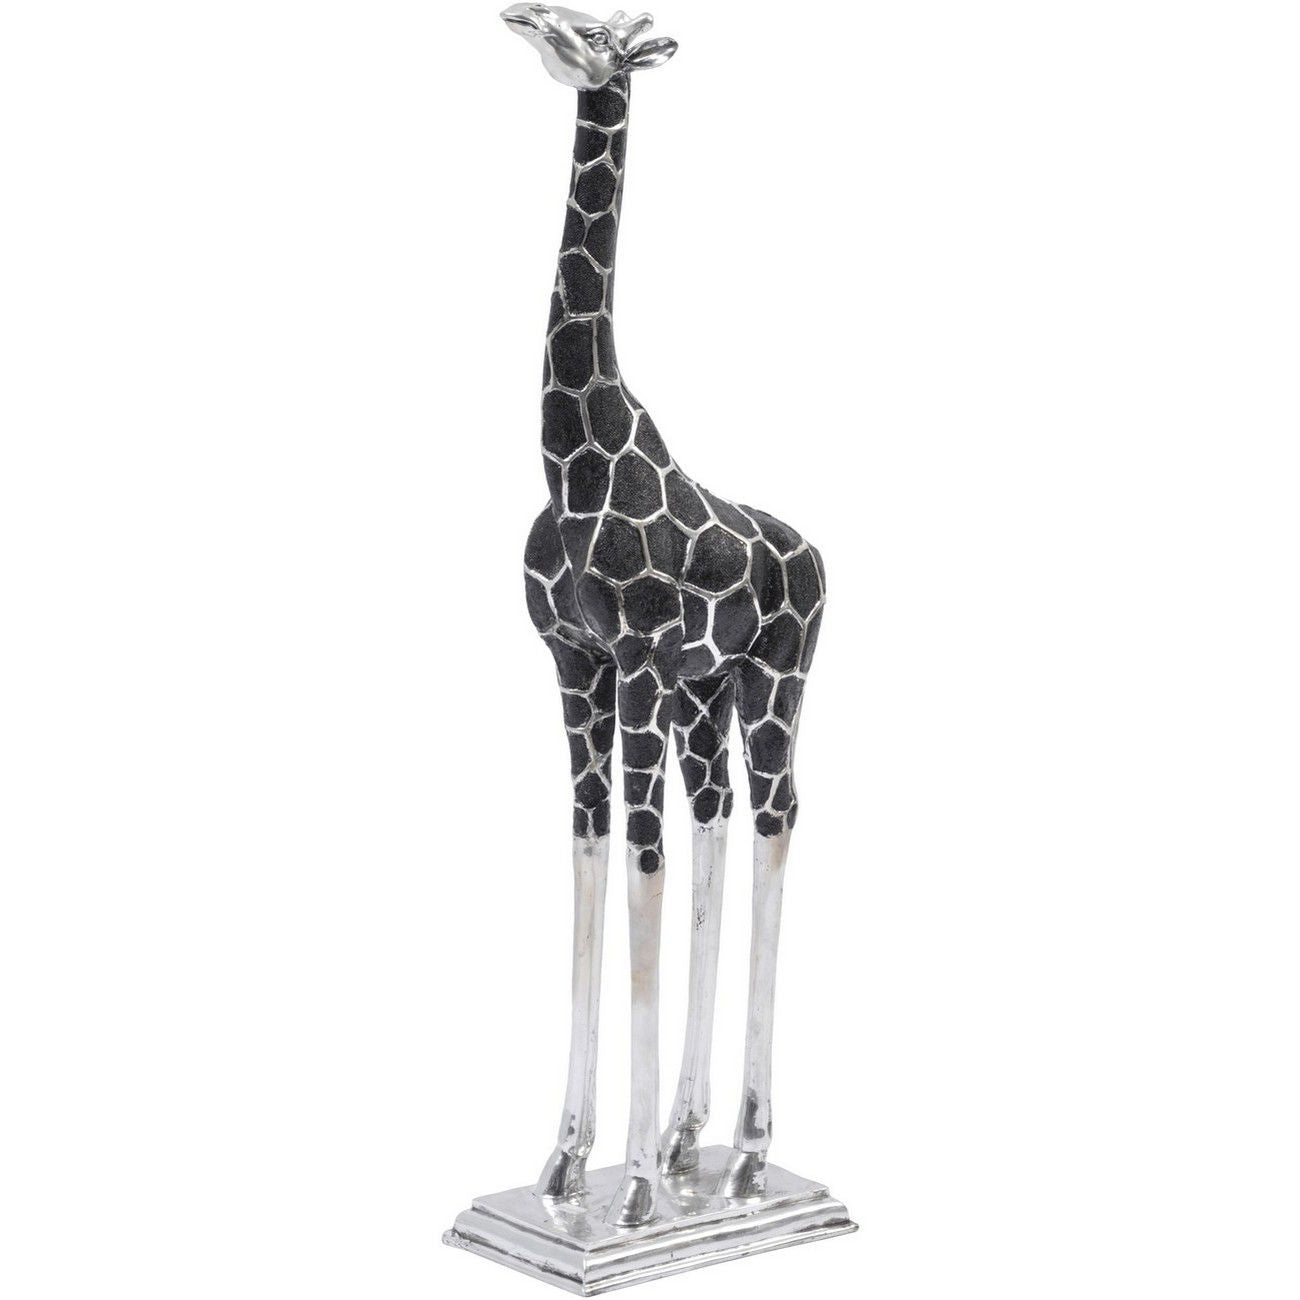 Giant Giraffe Sculpture Head Forward